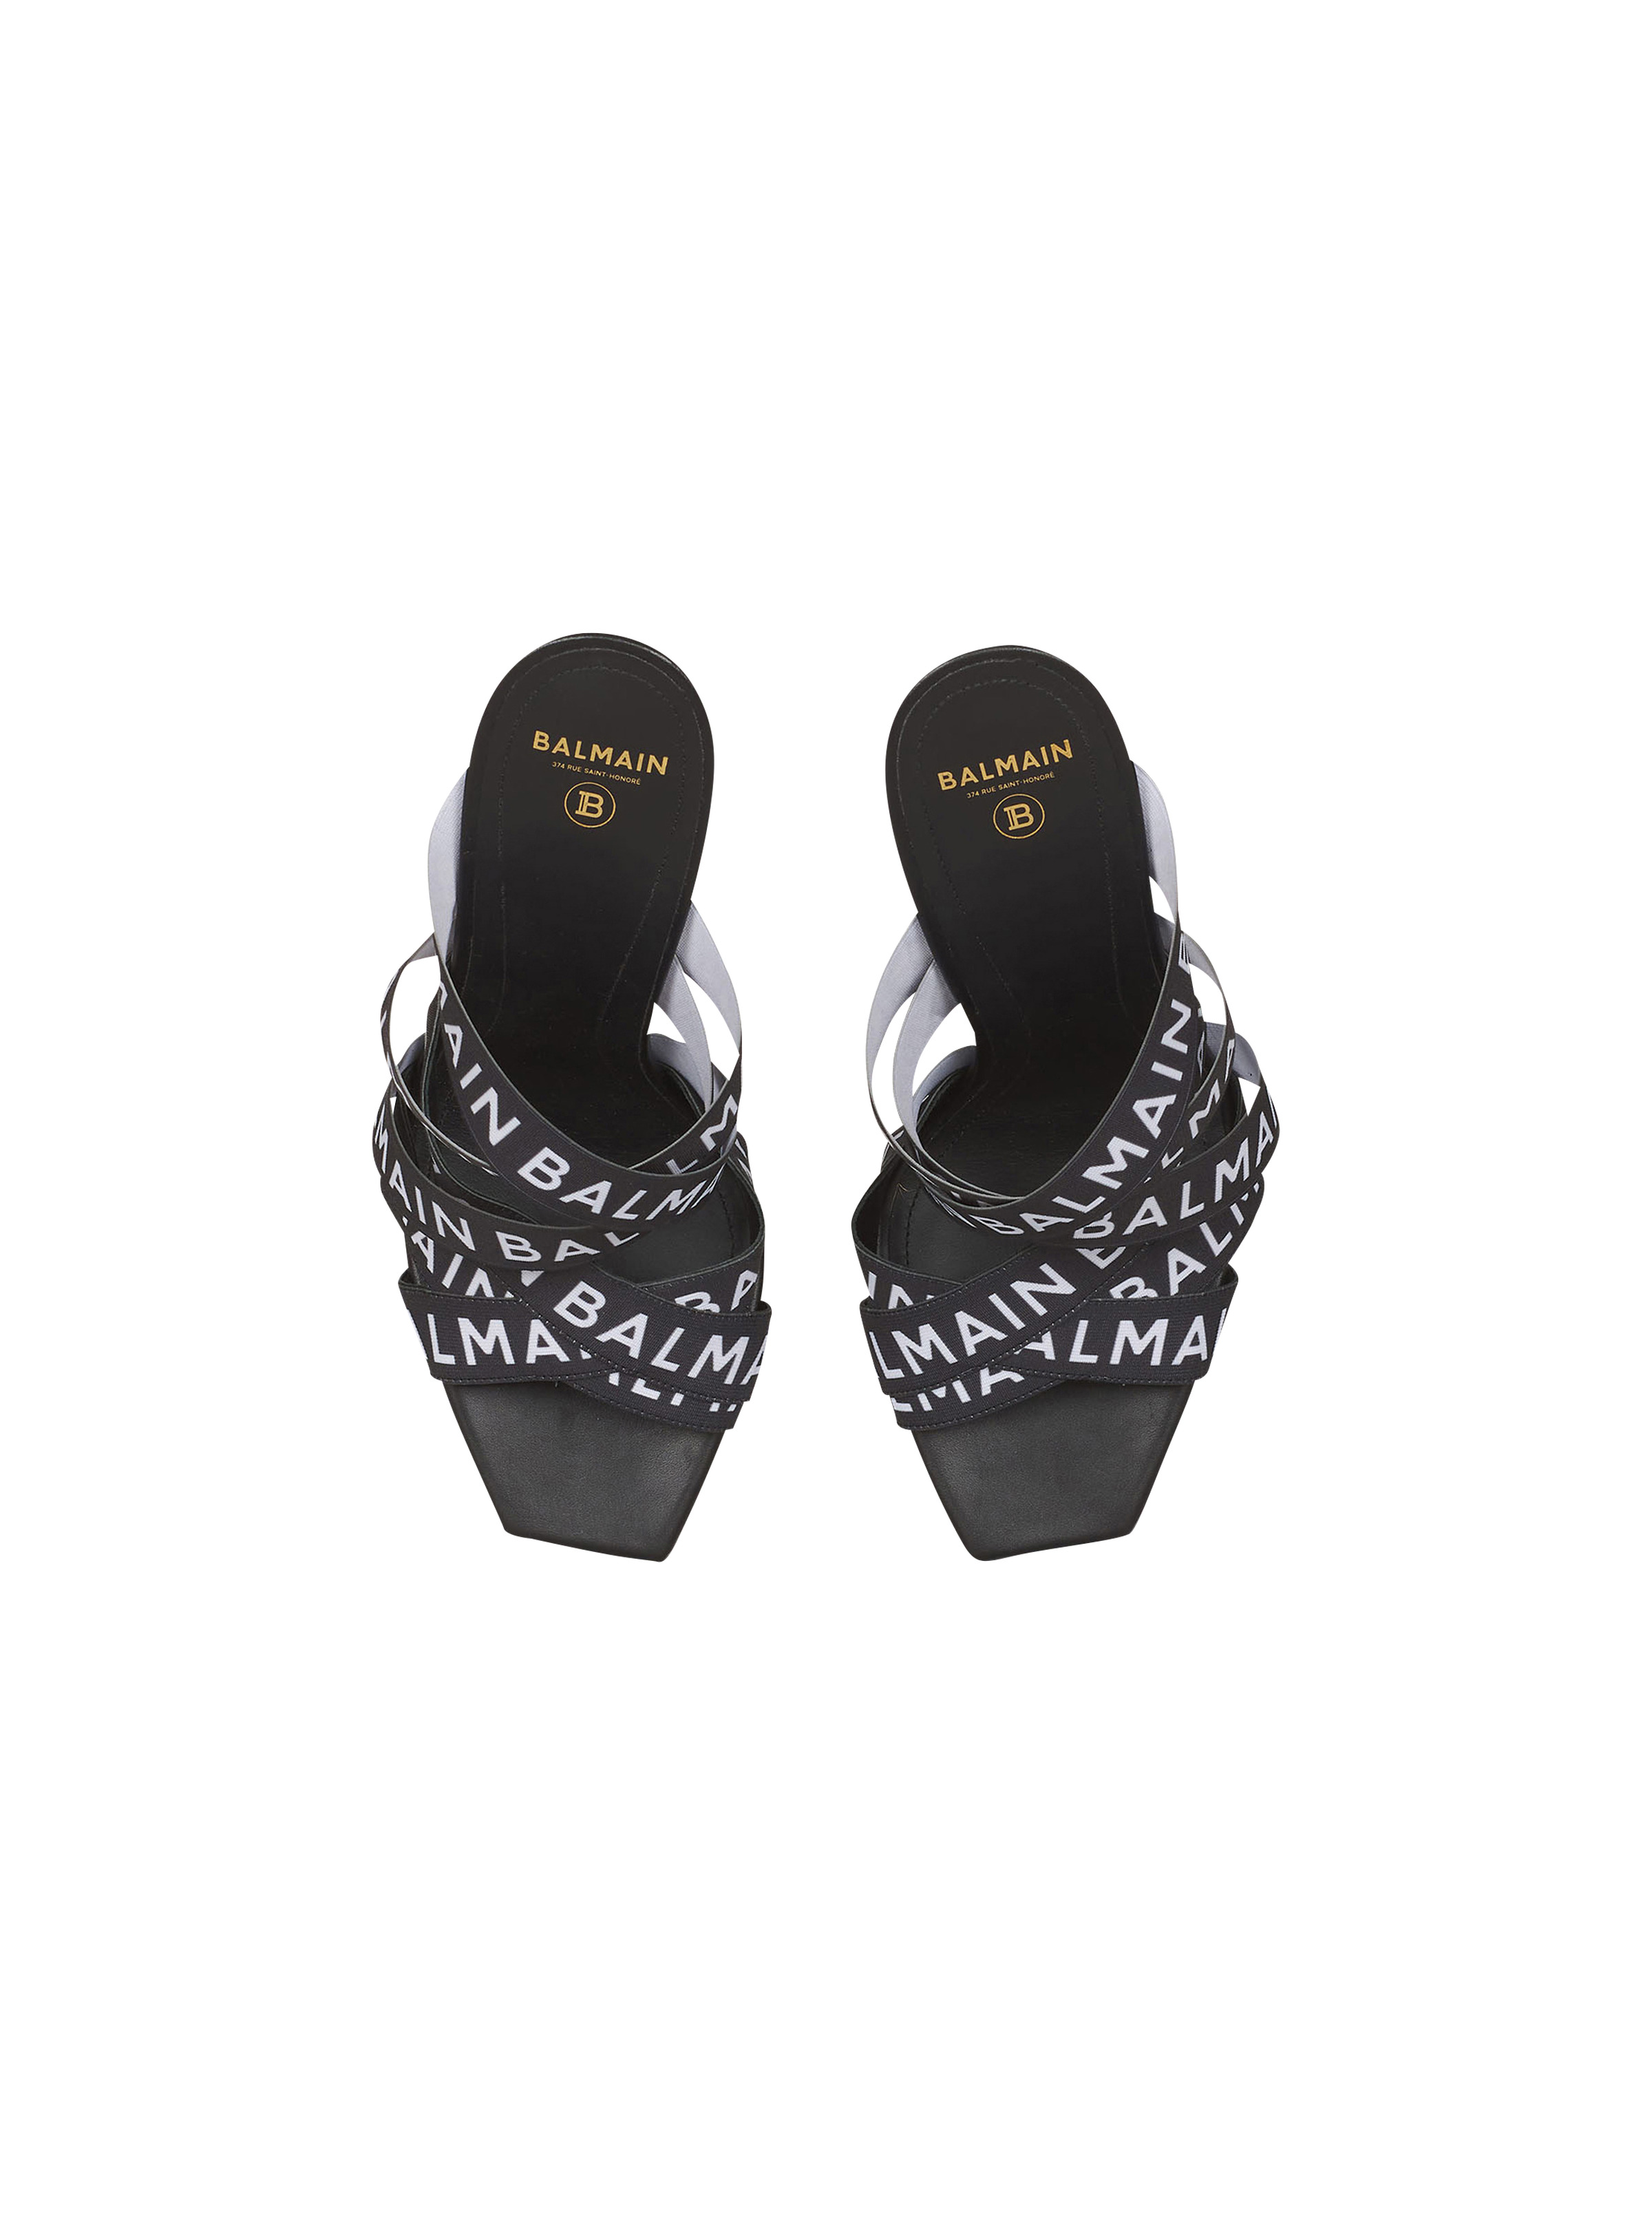 Union sandals with Balmain logo print - 3